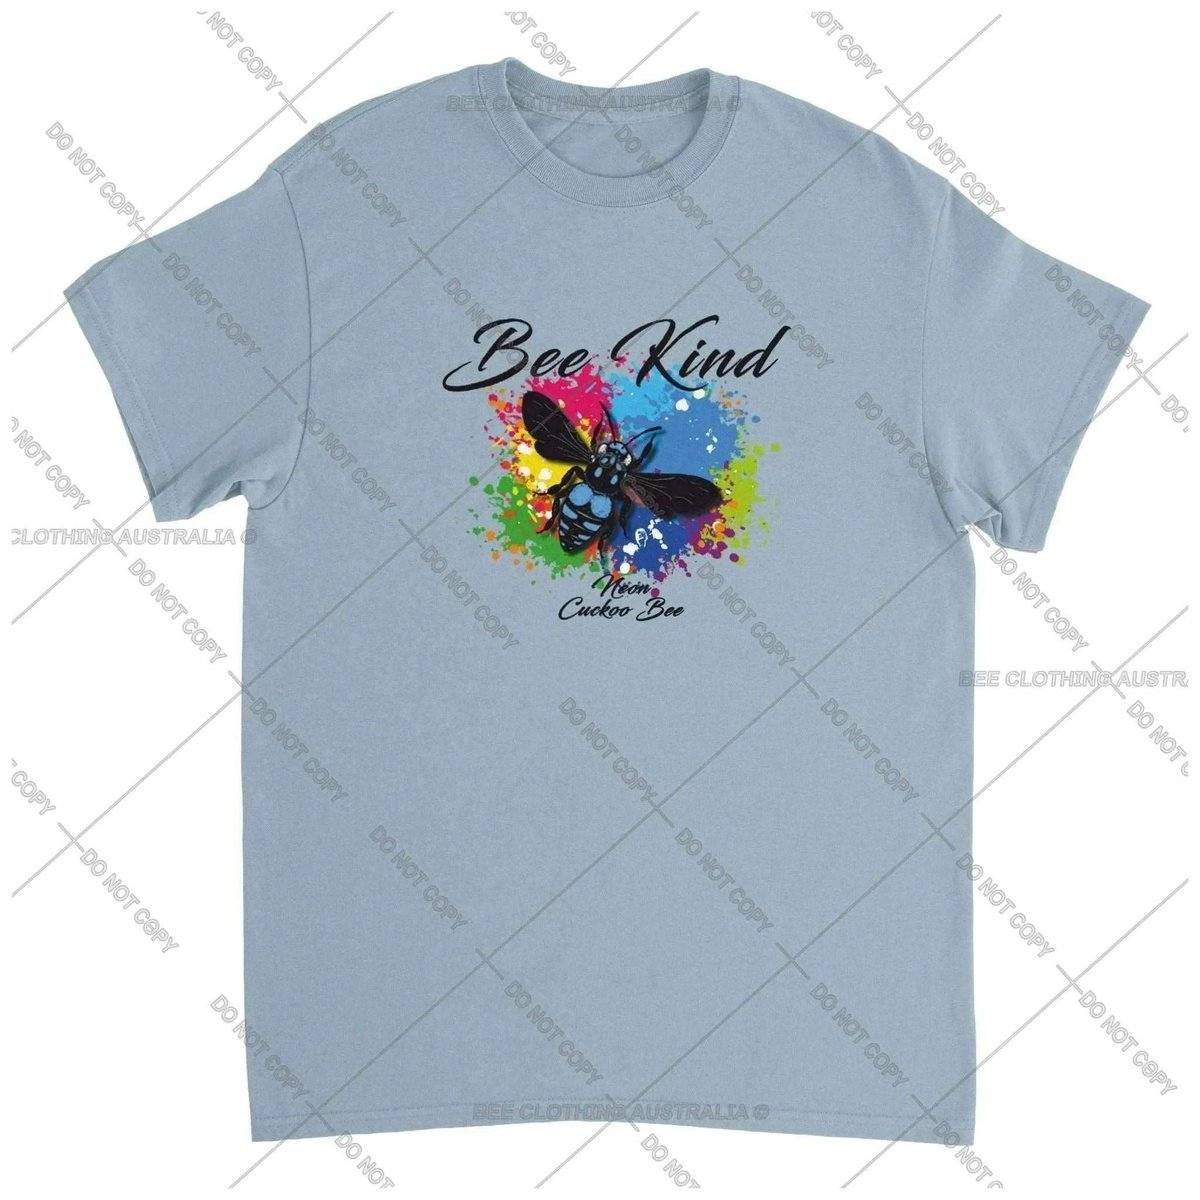 Bee Kind - Neon Cuckoo Bee - Native Bee T-Shirt Unisex - Classic Unisex Crewneck T-shirt Adults T-Shirts Unisex Light Blue / S Bee Clothing Australia